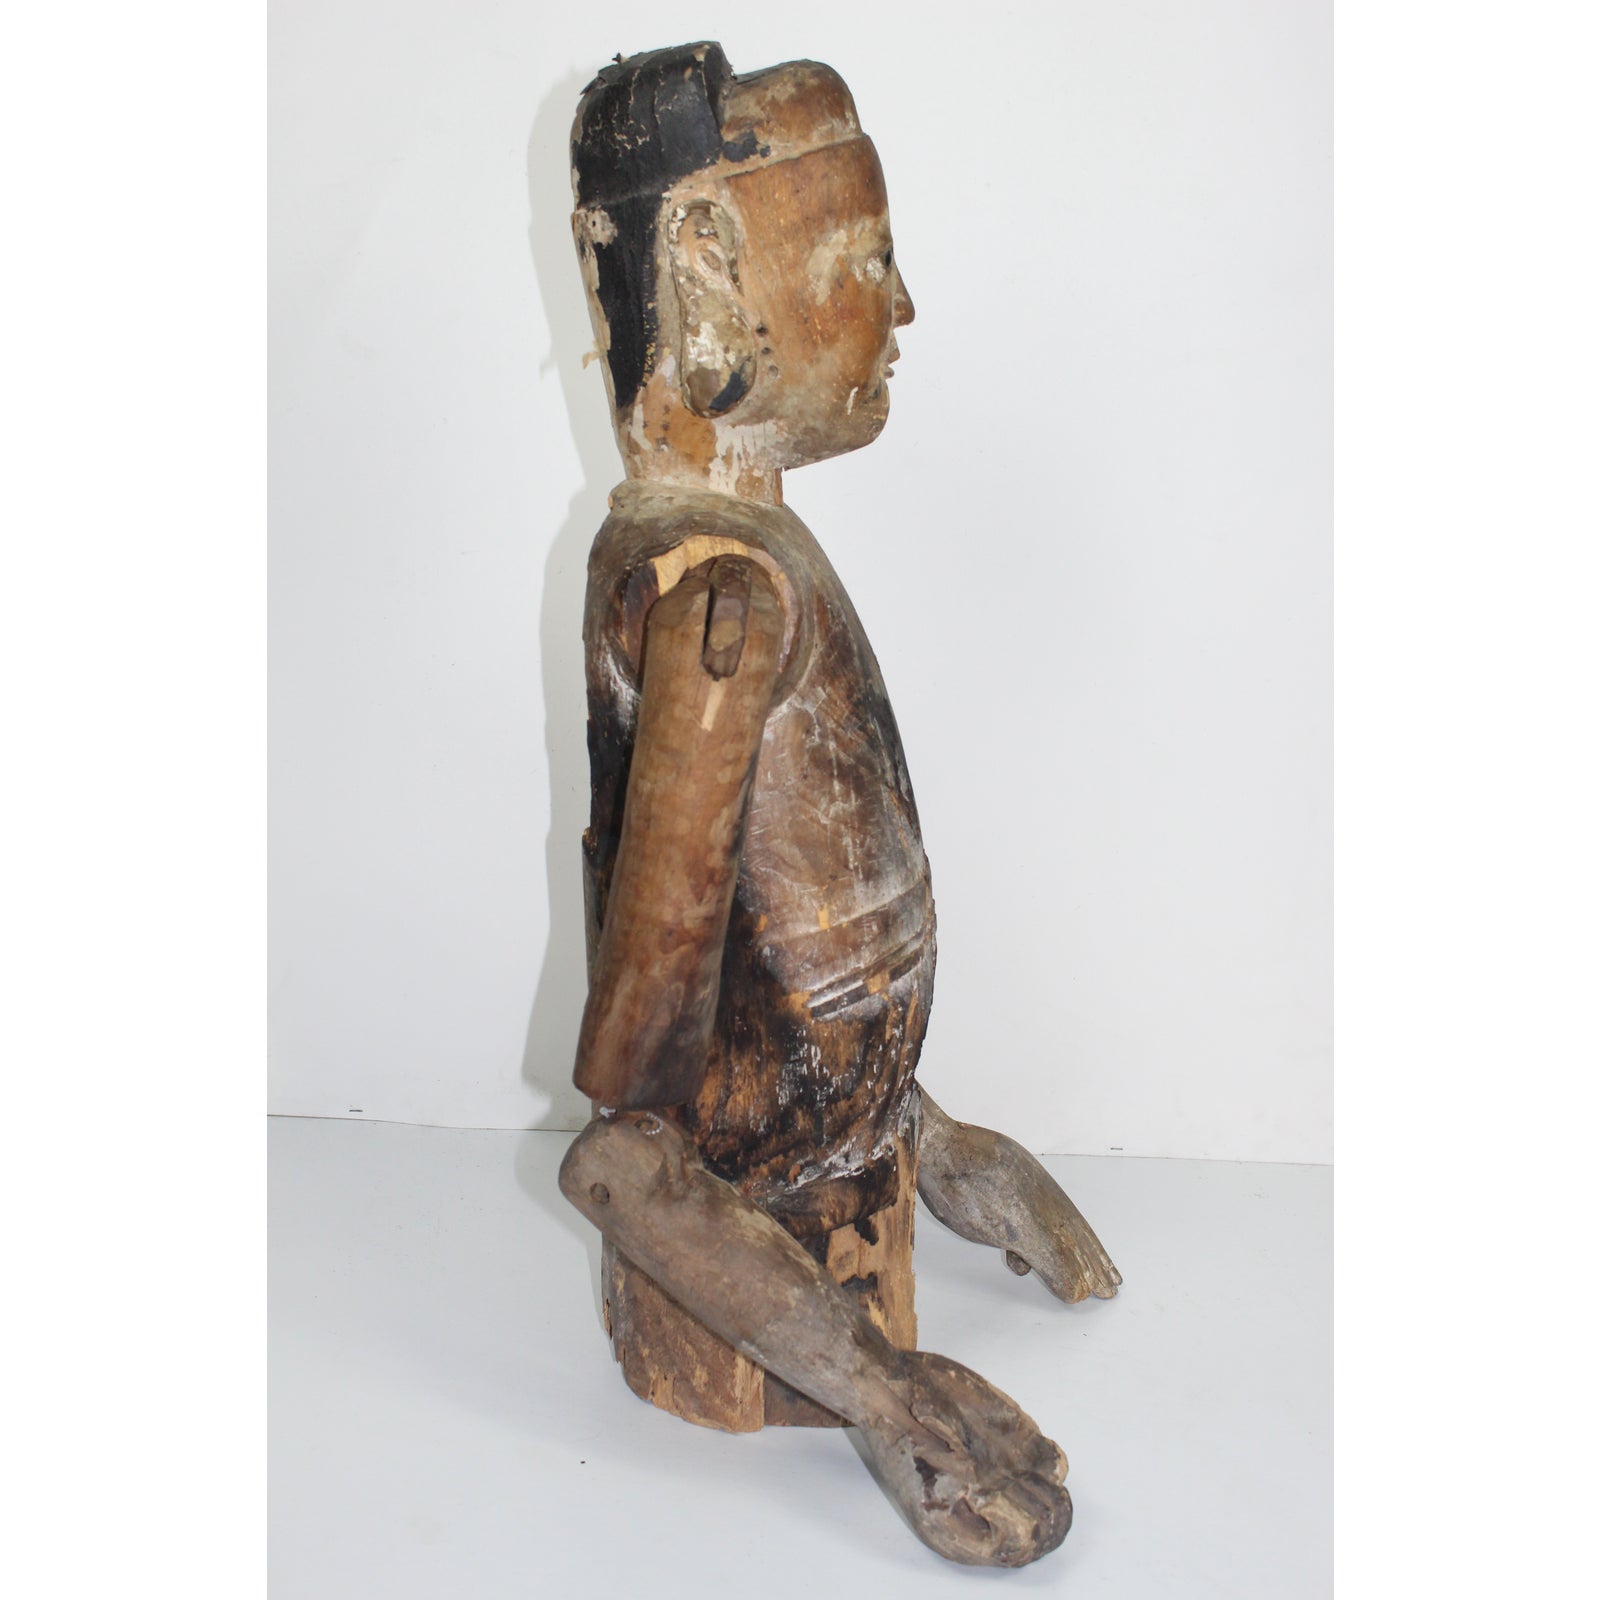 18ccentury-pacific-rim-carved-wooden-figure-sculpture-9237